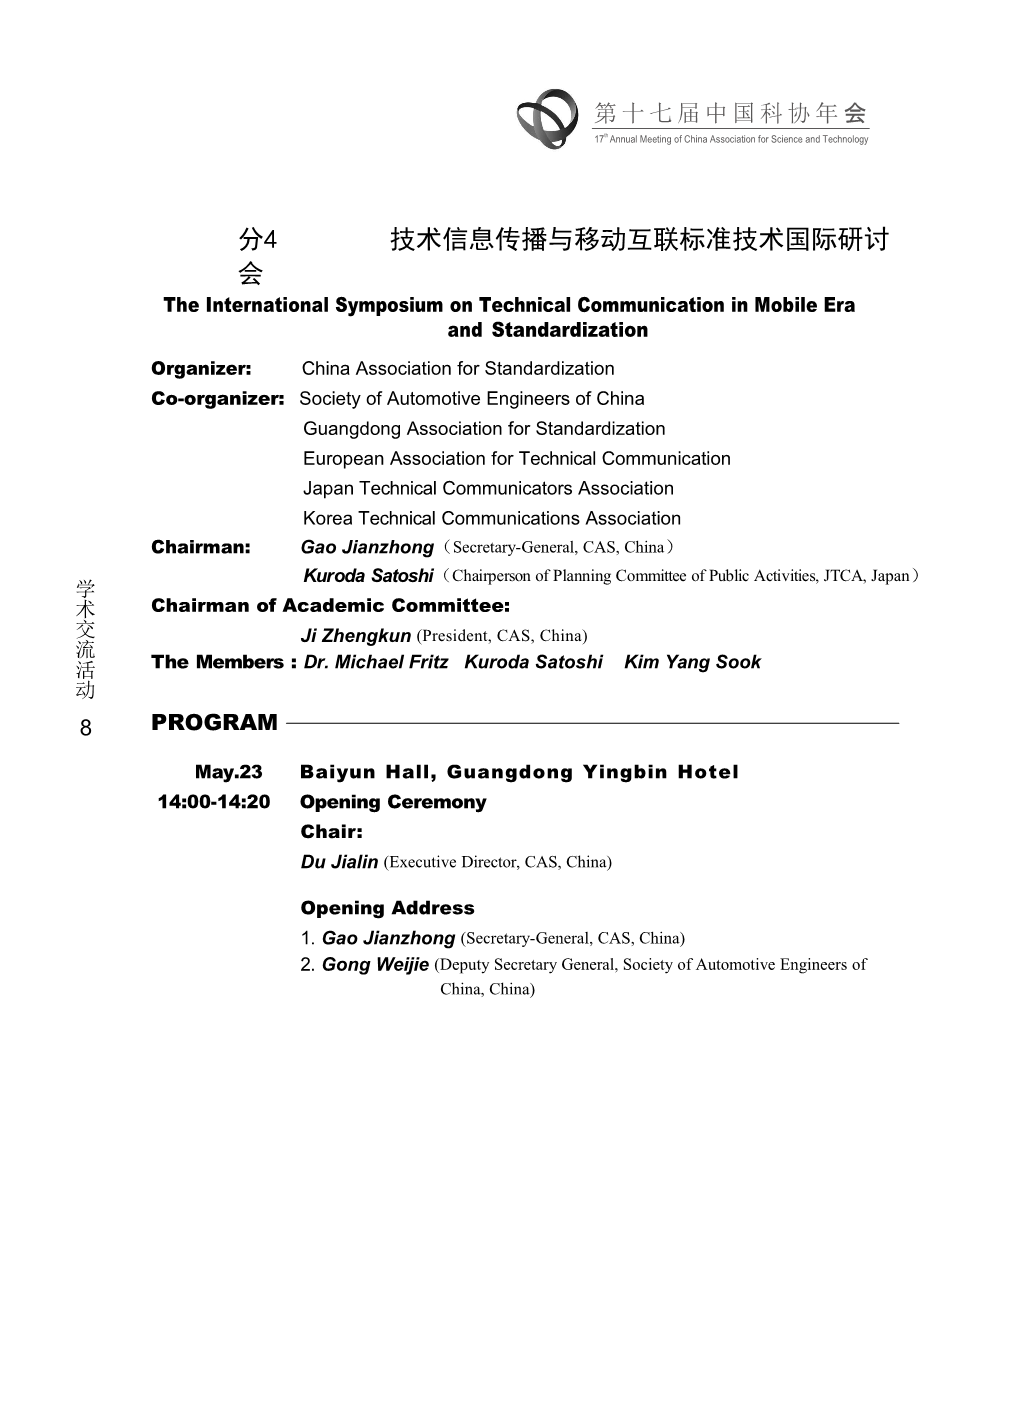 Organizer: China Association for Standardization